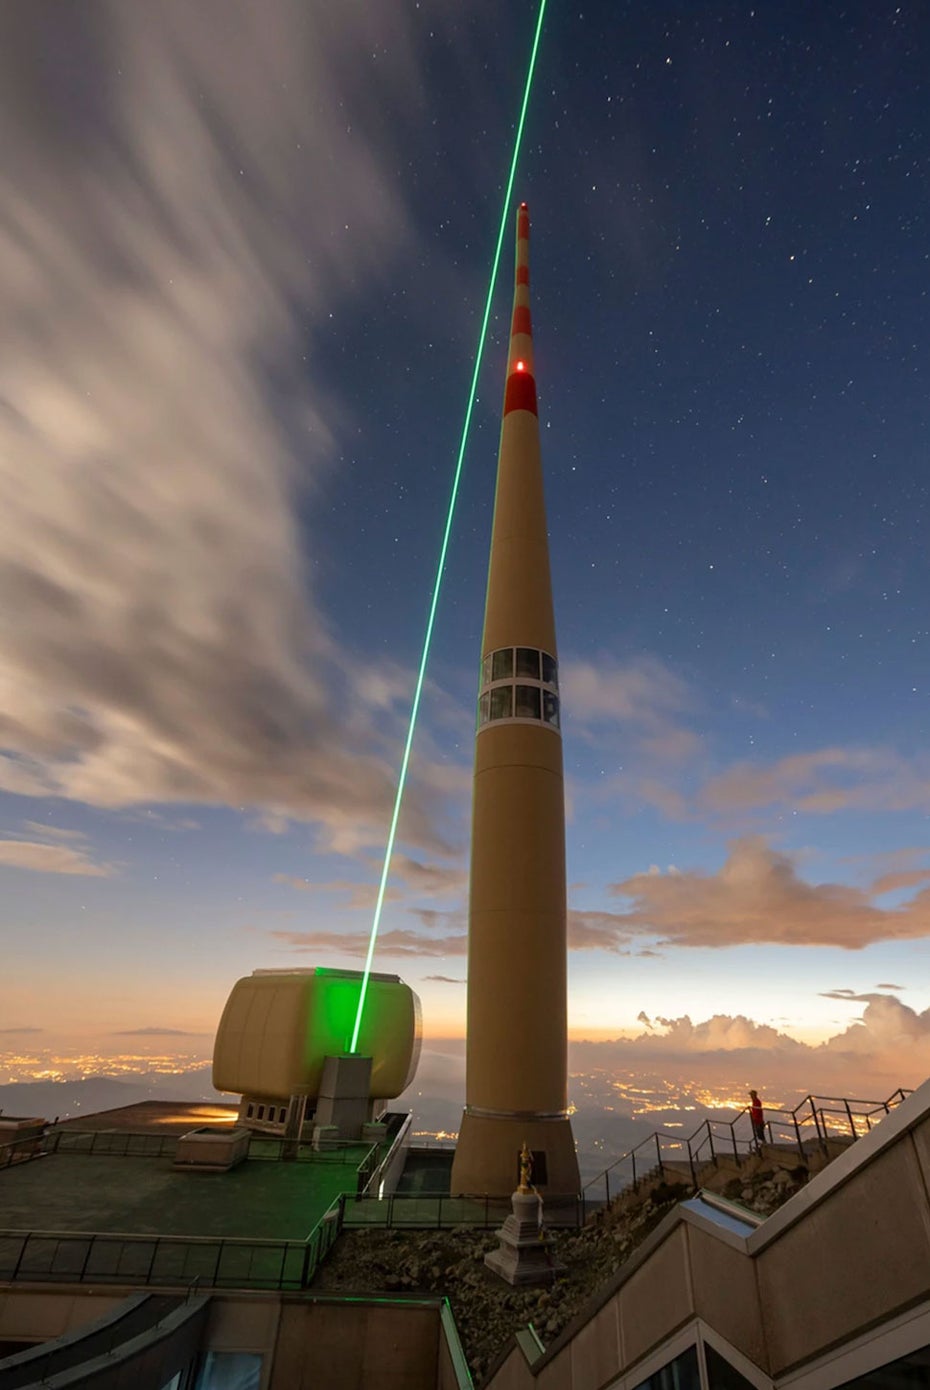 Kommunikationsturm auf dem Berg Säntis, in direkter Nähe ein Laserstrahl. (Bild: Martin Stollberg)